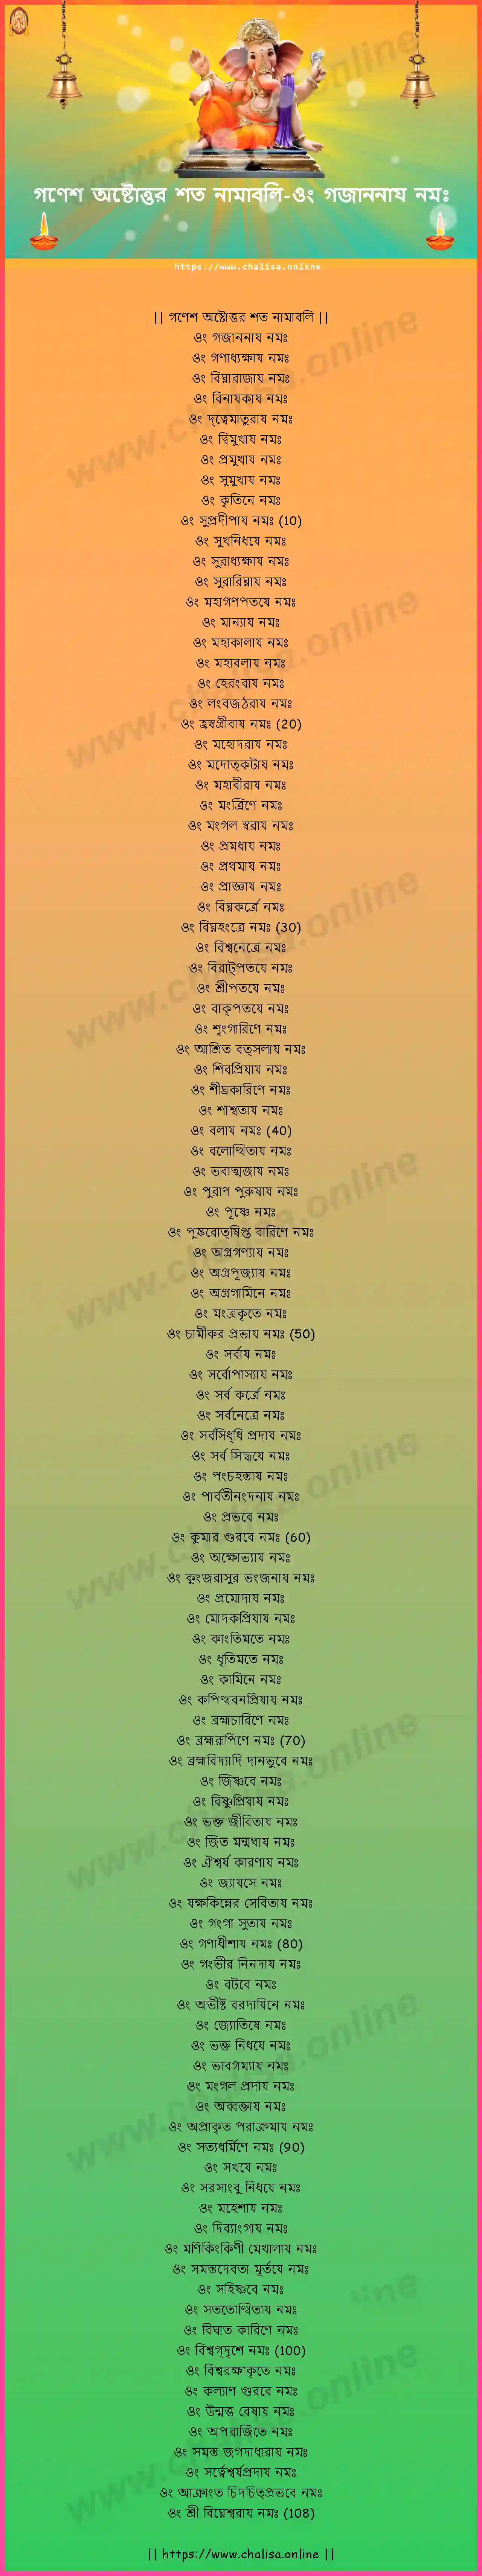 om-gajananaya-ganesha-ashtottara-sata-namavali-bengali-bengali-lyrics-download